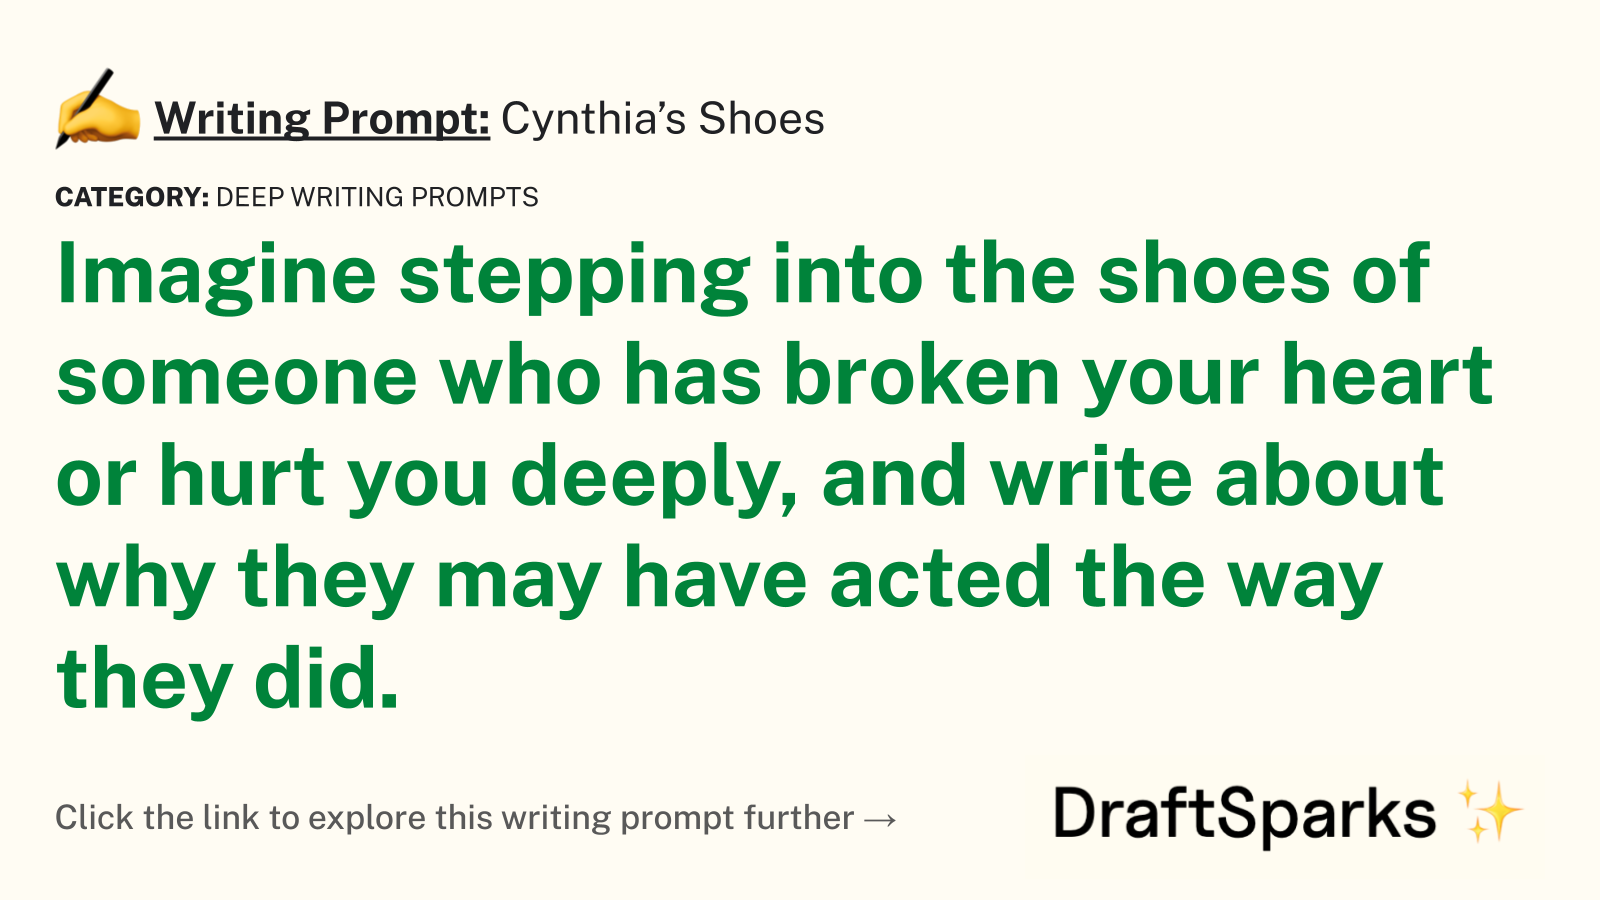 Cynthia’s Shoes